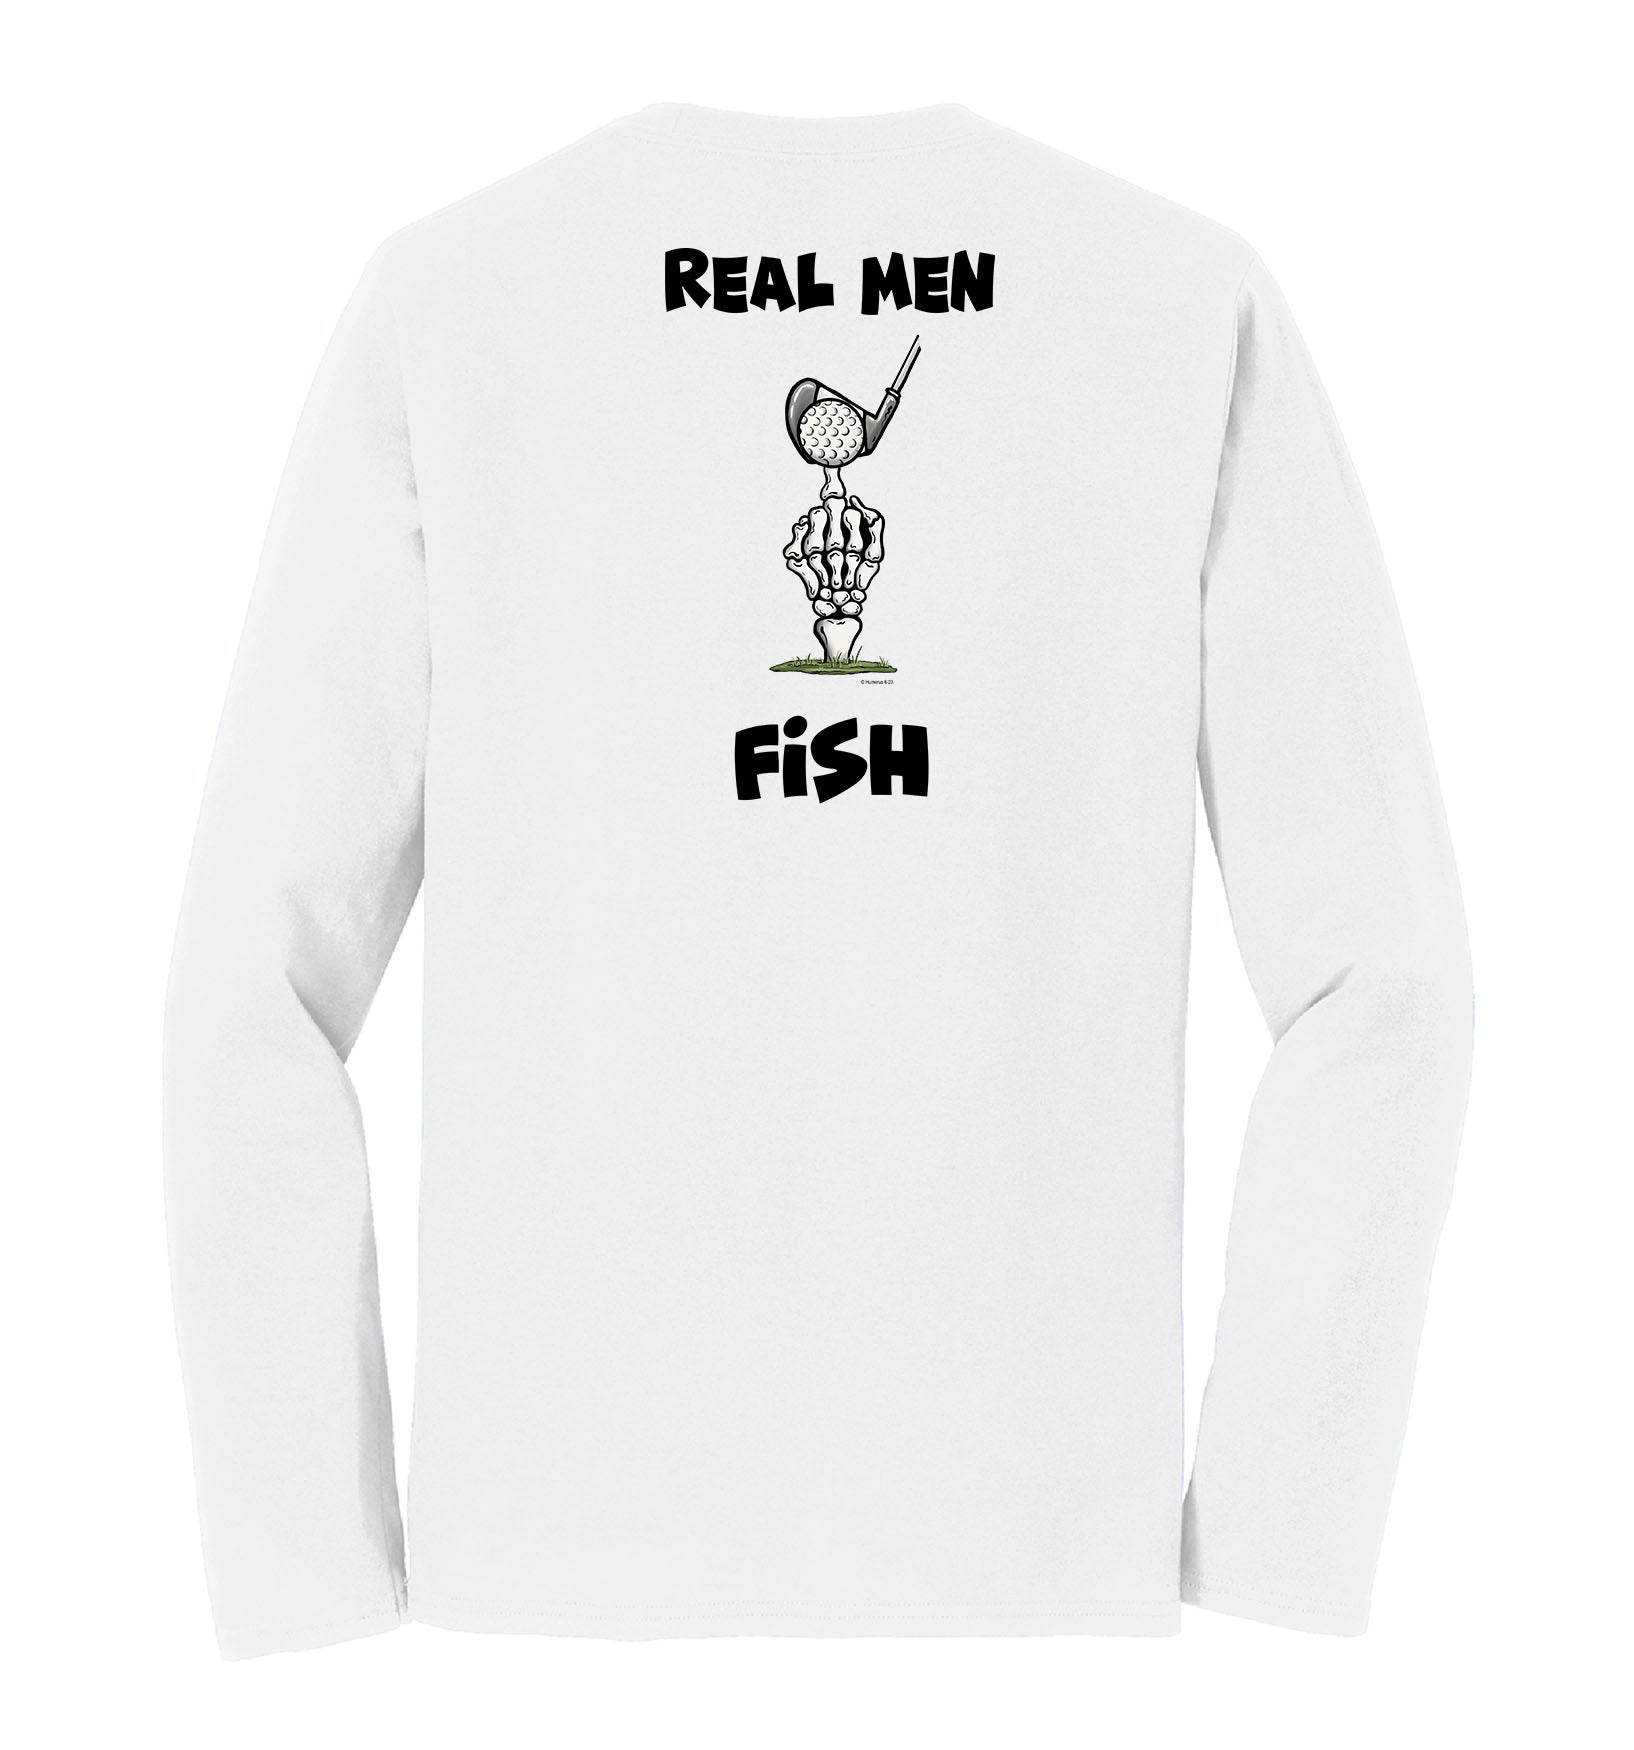 Real Men Fish - Unisex Long Sleeve Tee